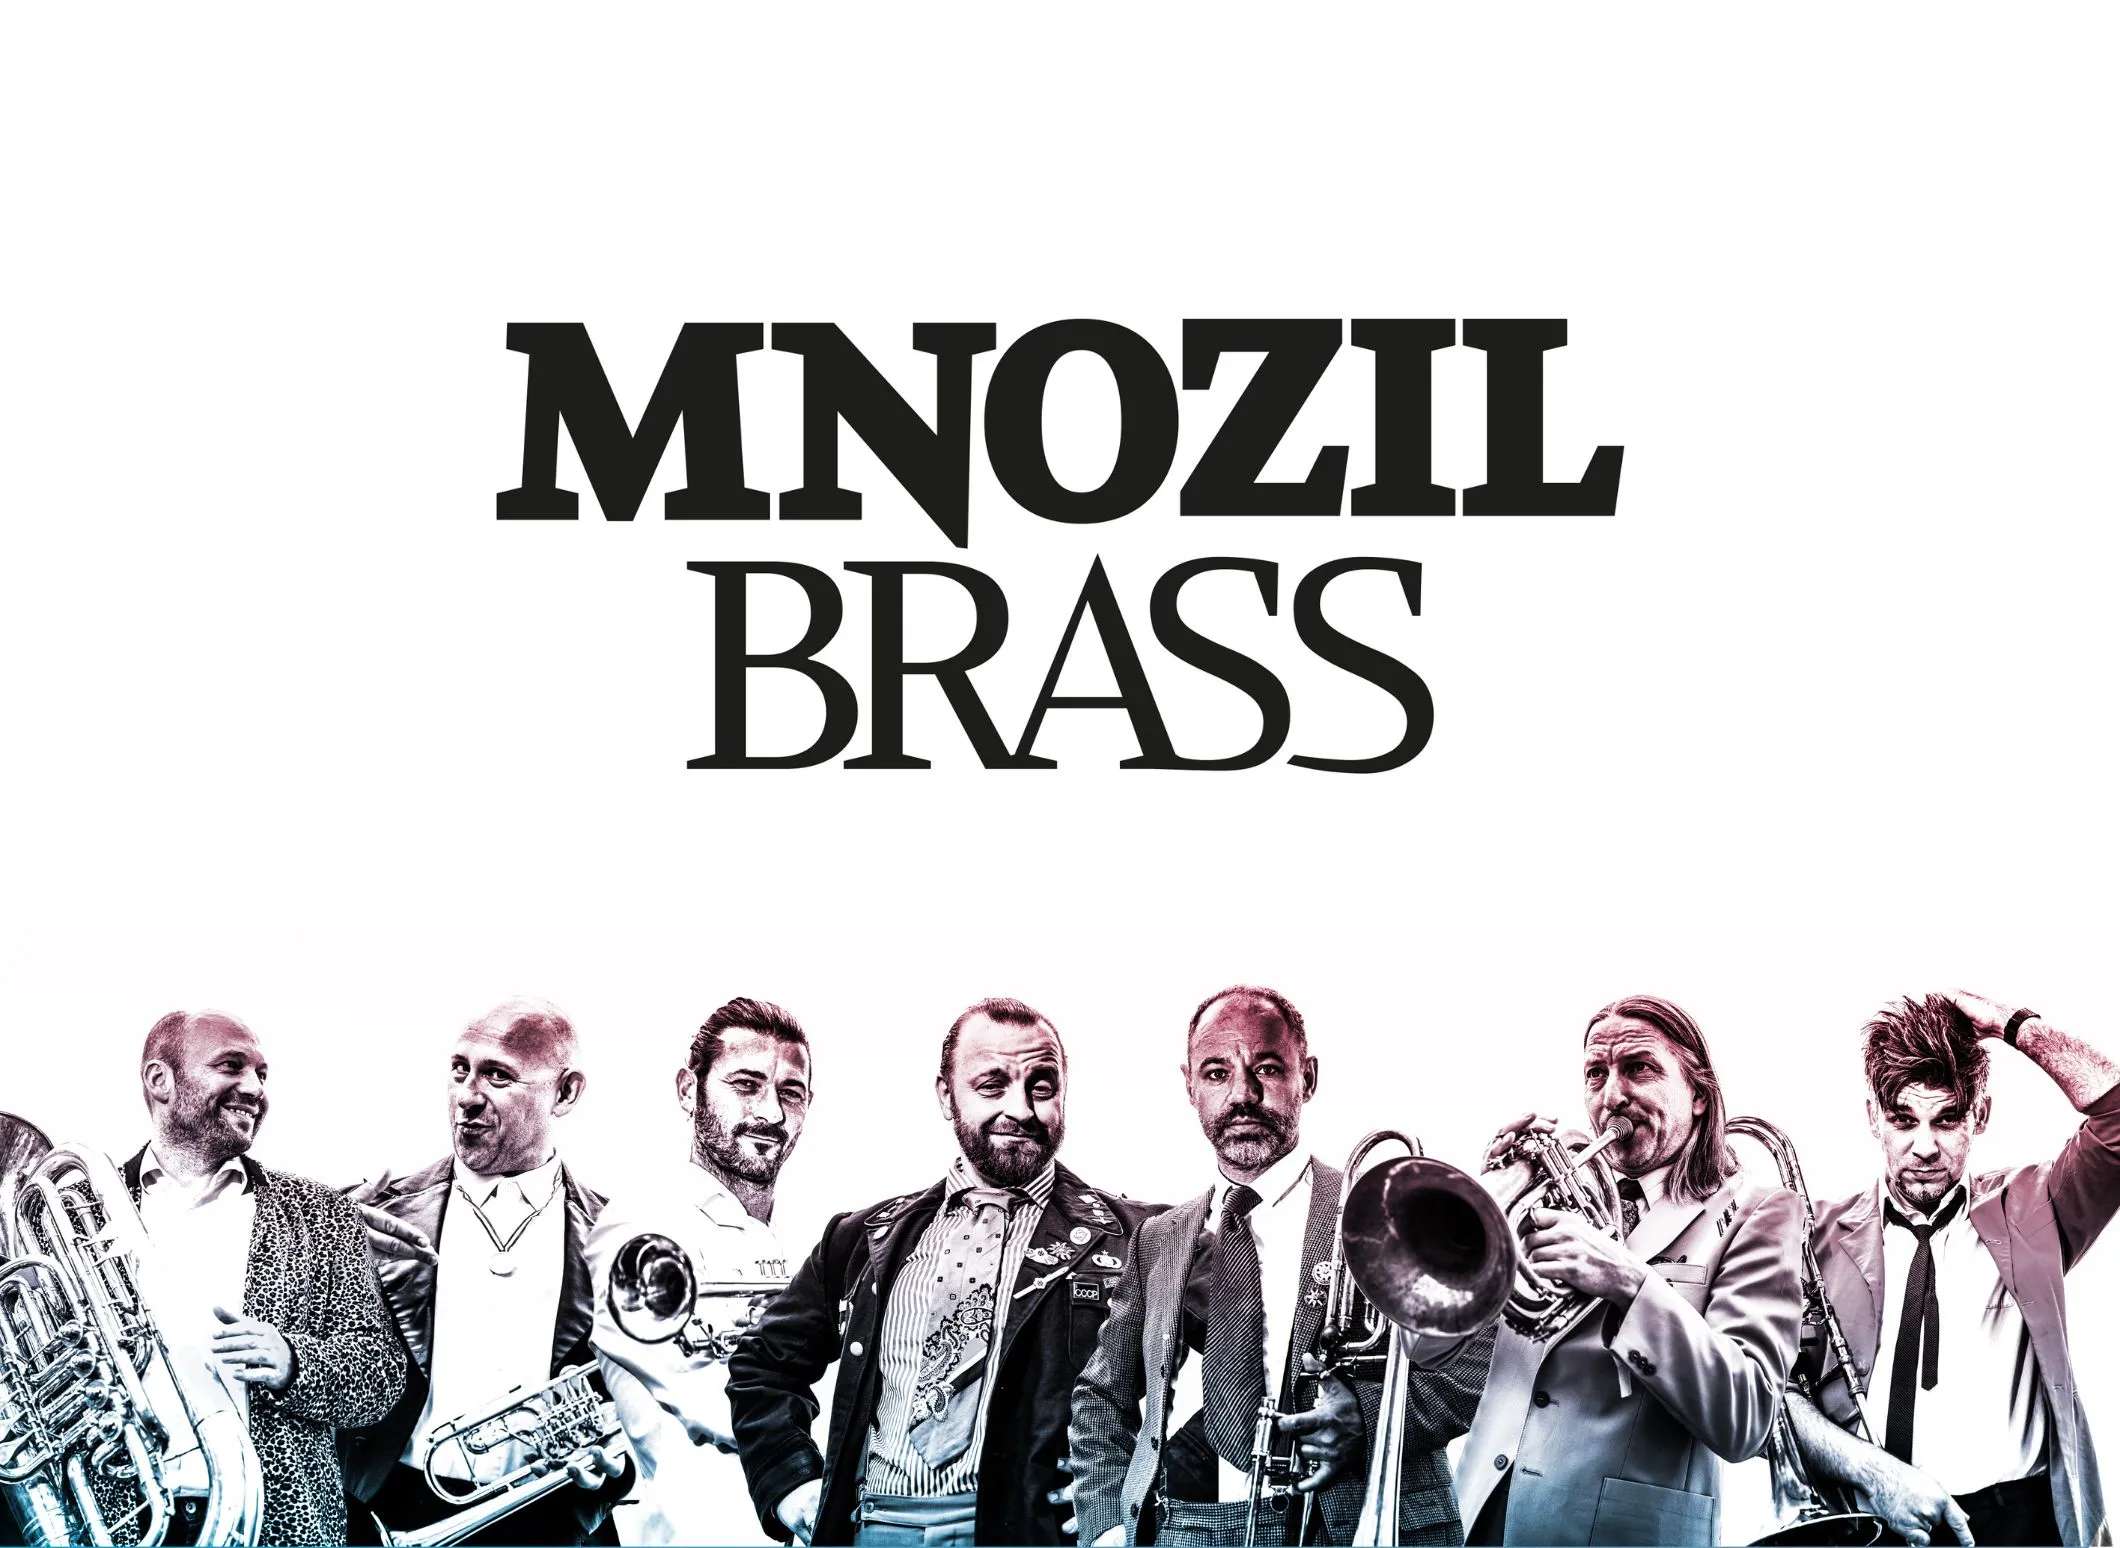 Mnozil Brass band members and logo